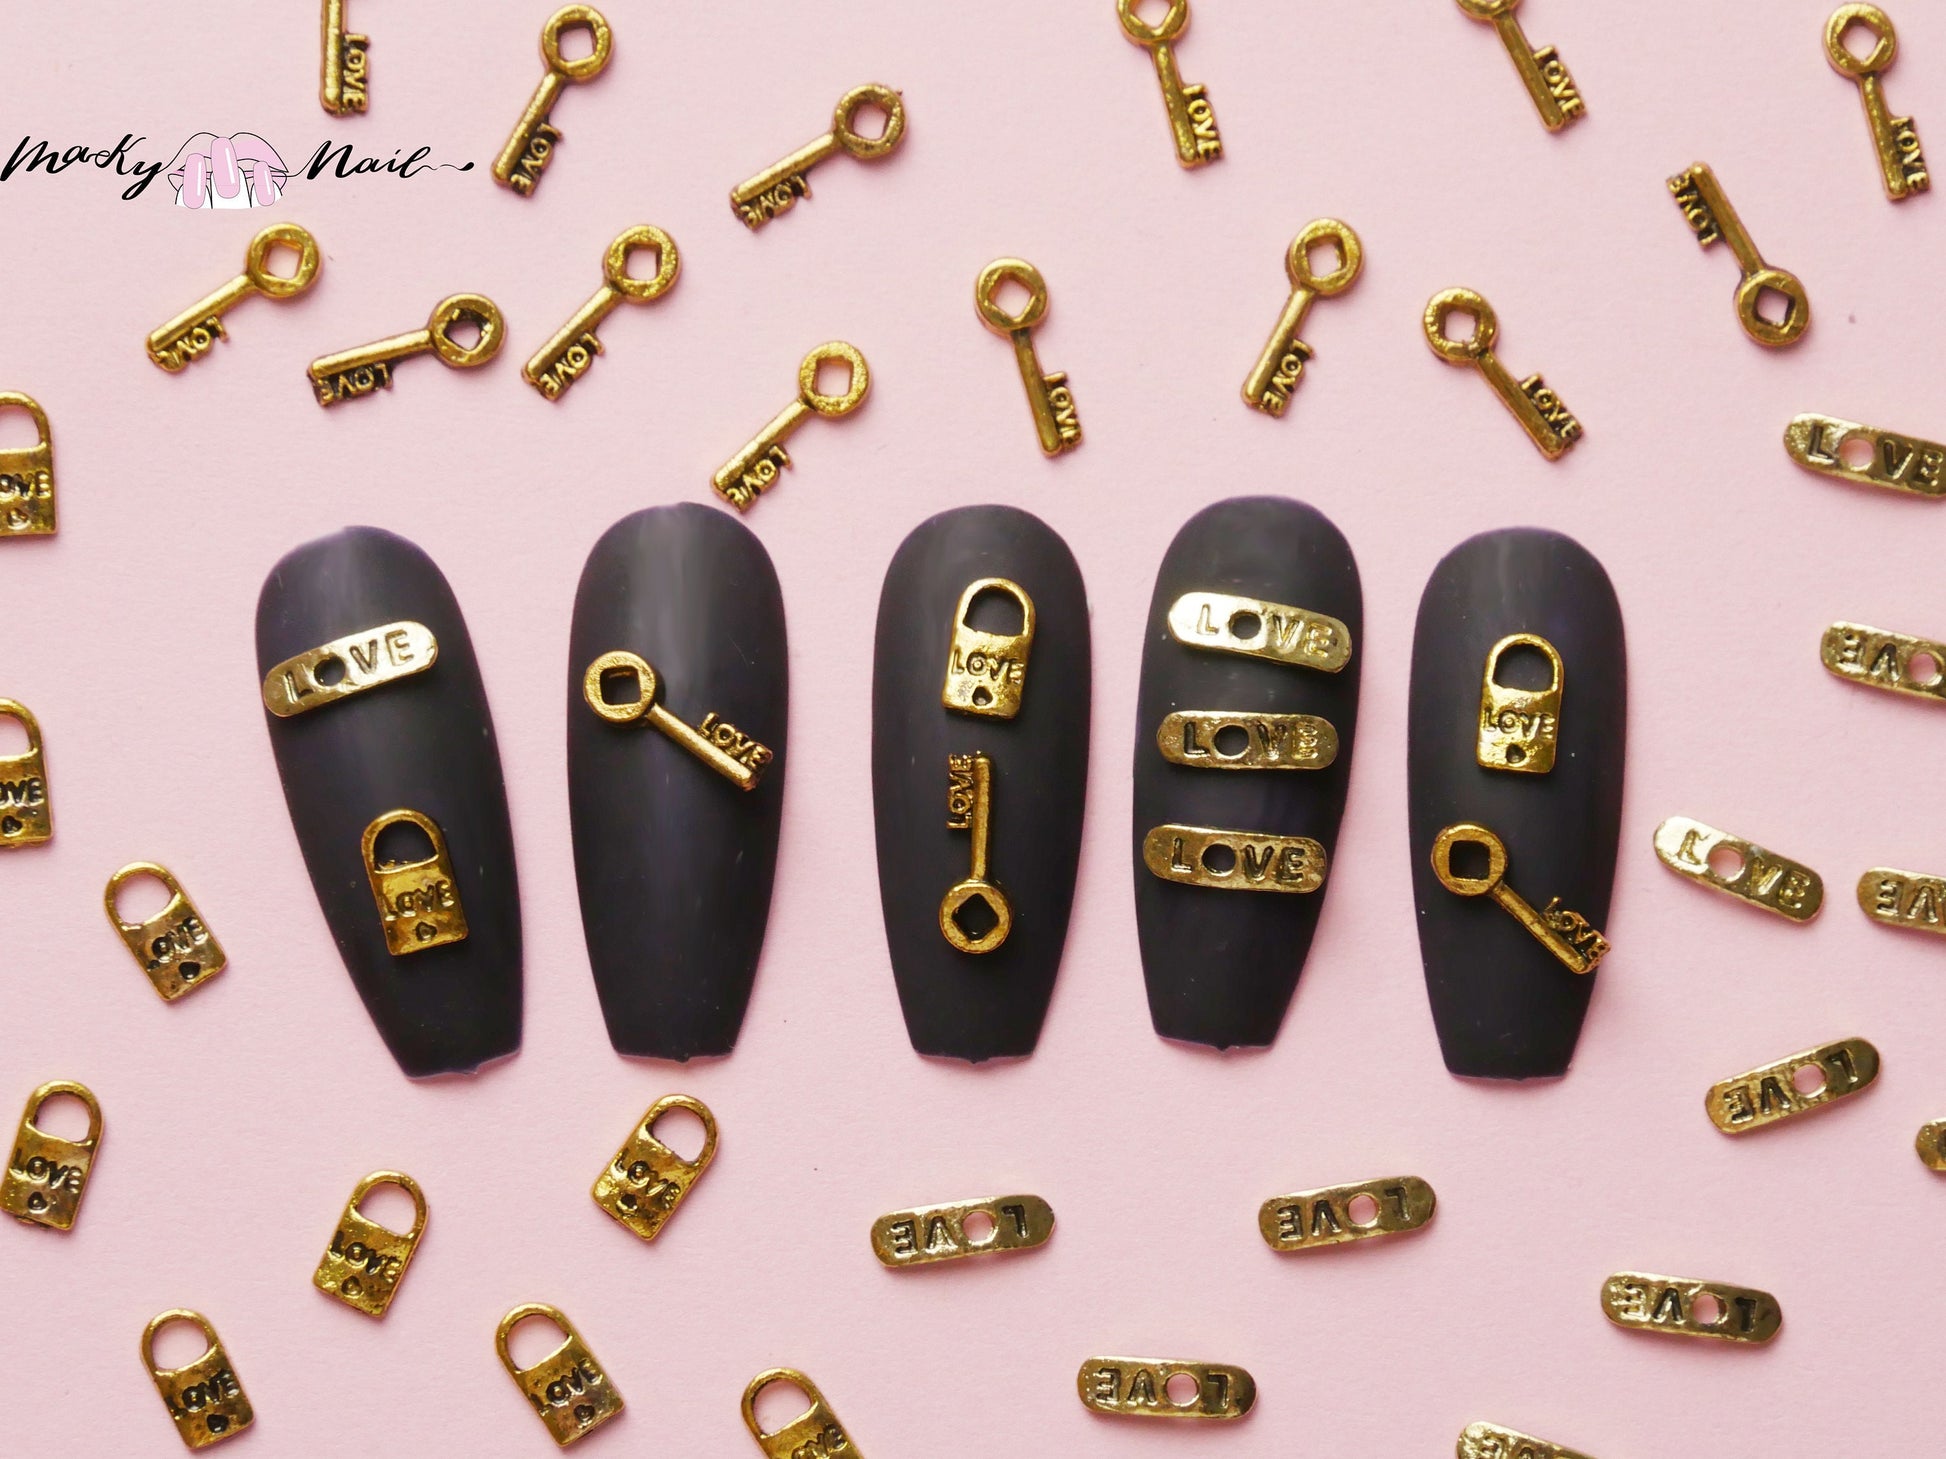 5 pcs Locks of love nail decoration/ Bronze Retro Love locks Nail DIY nail deco/ Lock your love key nail charms design